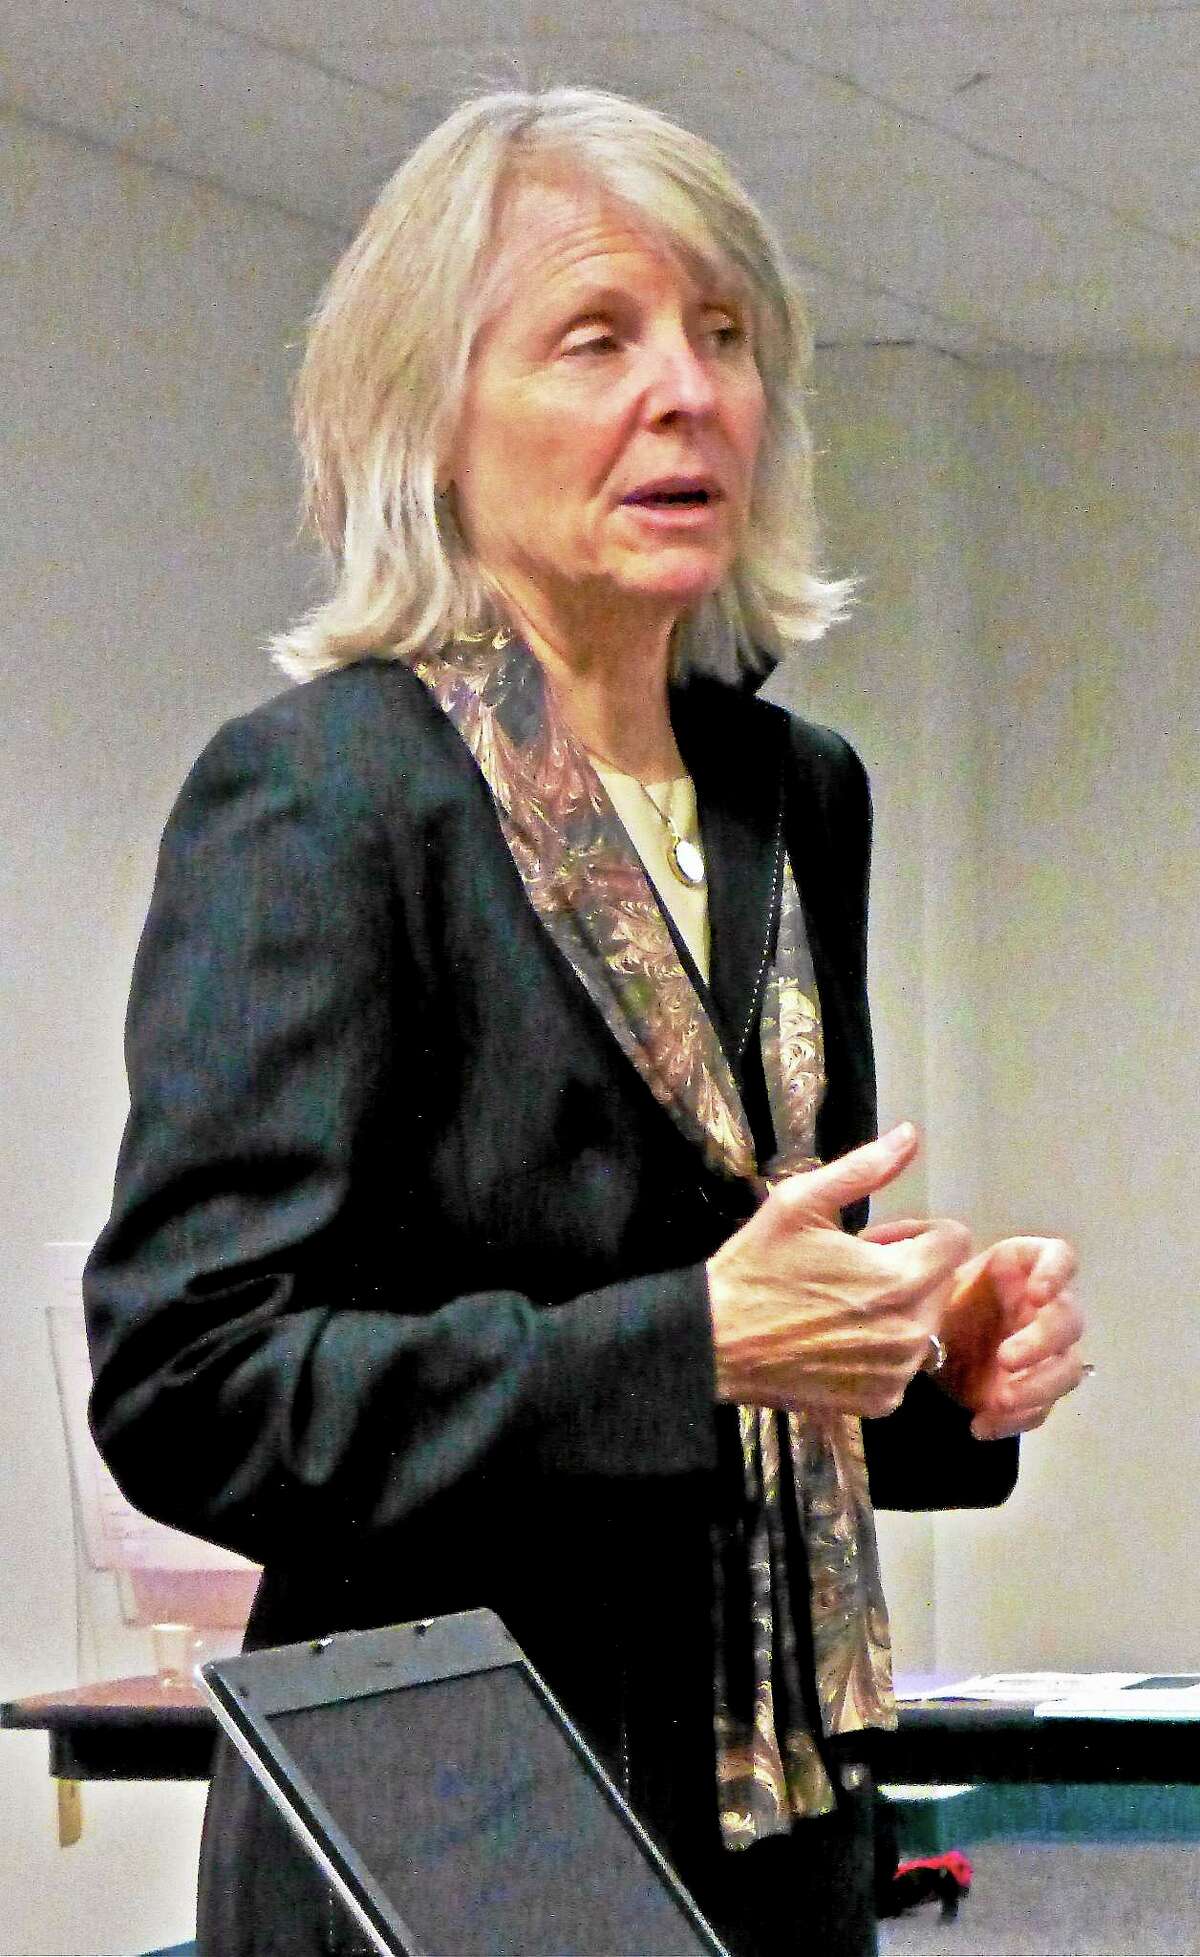 Department of Economic and Community Development Commissioner Catherine Smith